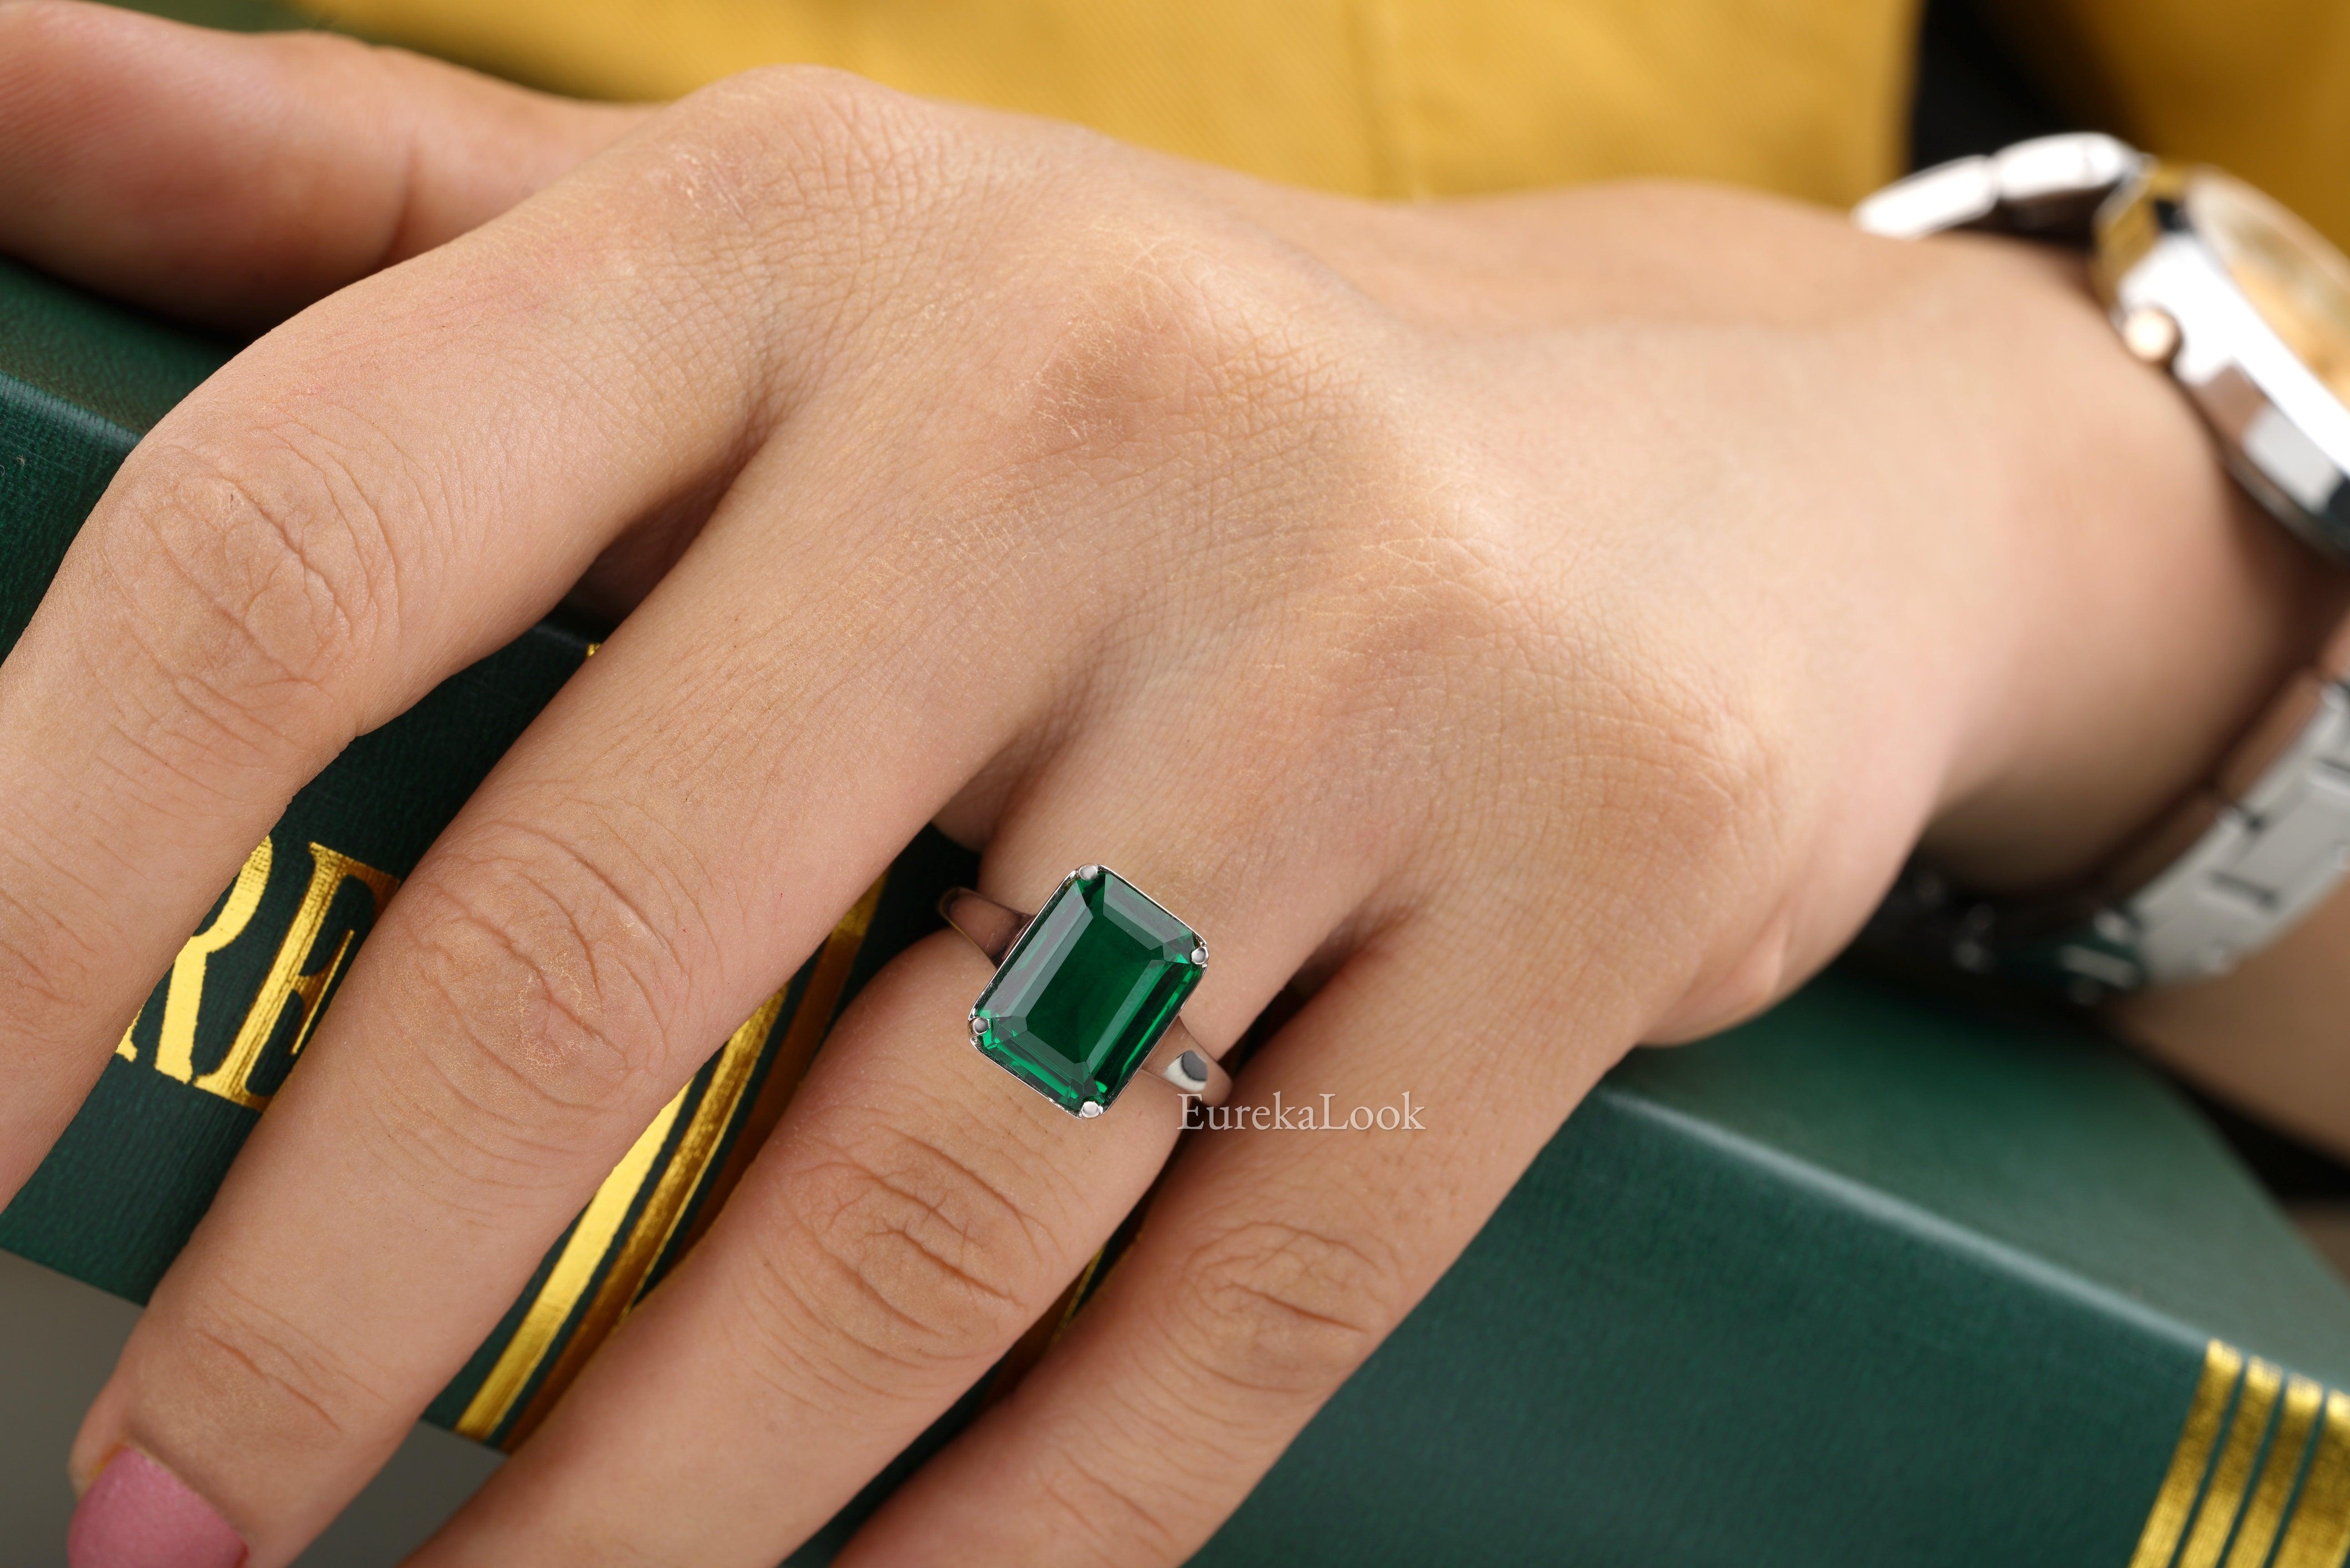 5.00CT Emerald Cut Emerald Diamond Wedding Ring - Eurekalook